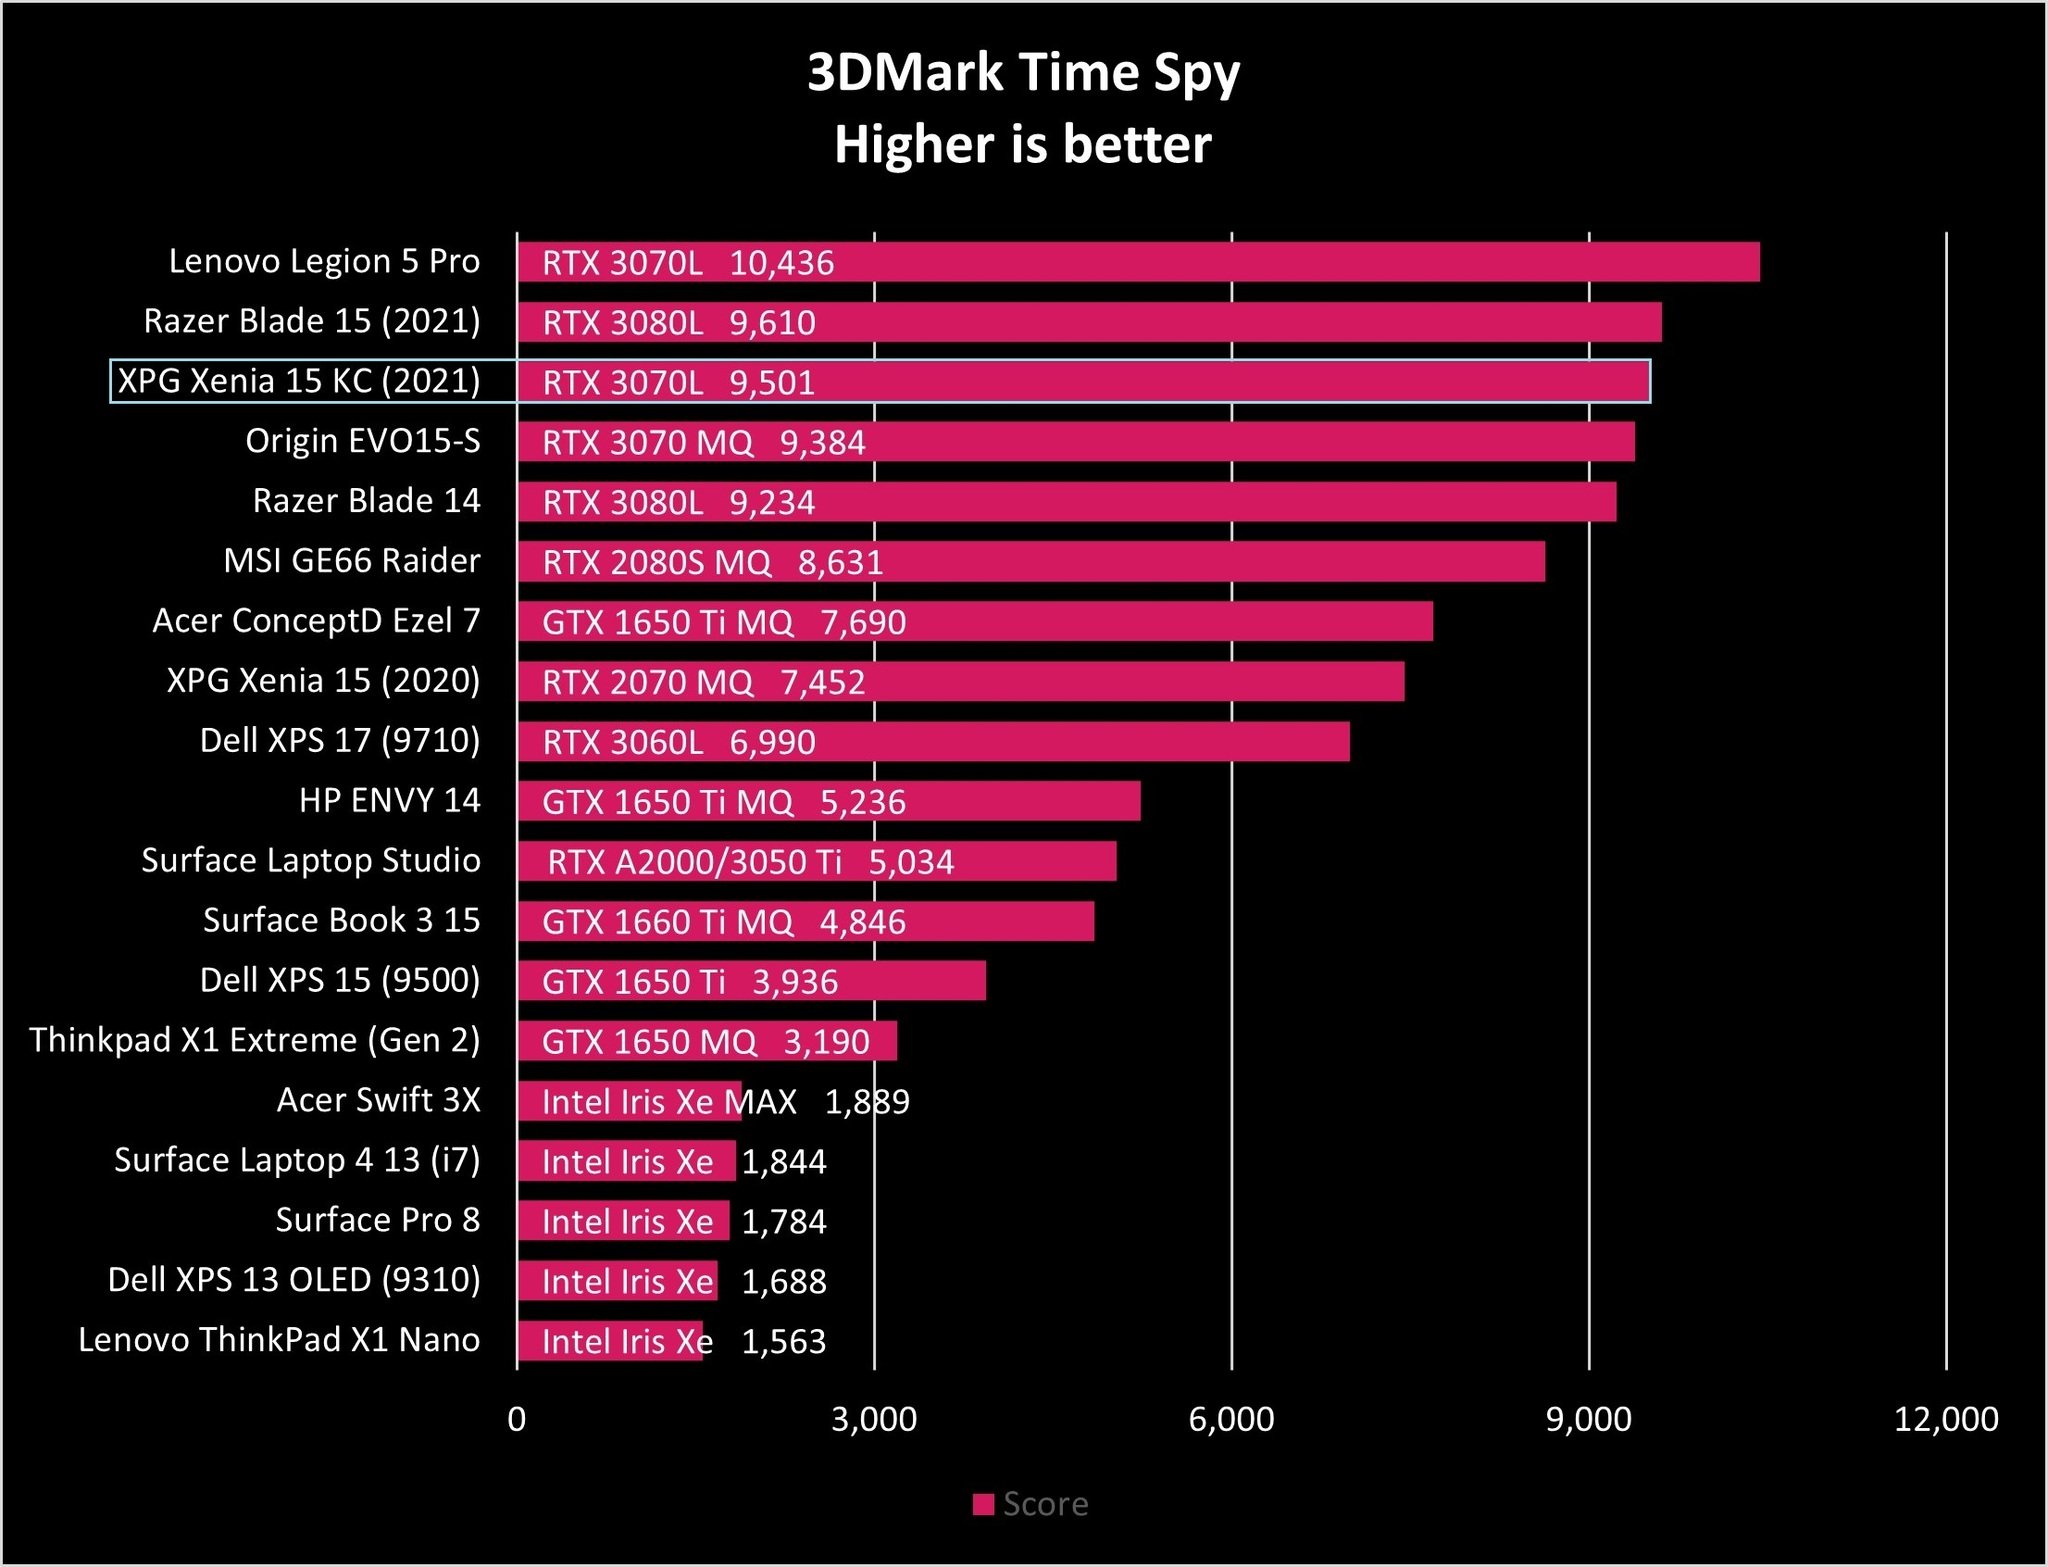 Xpg Xenia 15 Kc 2021 Time Spy Graph